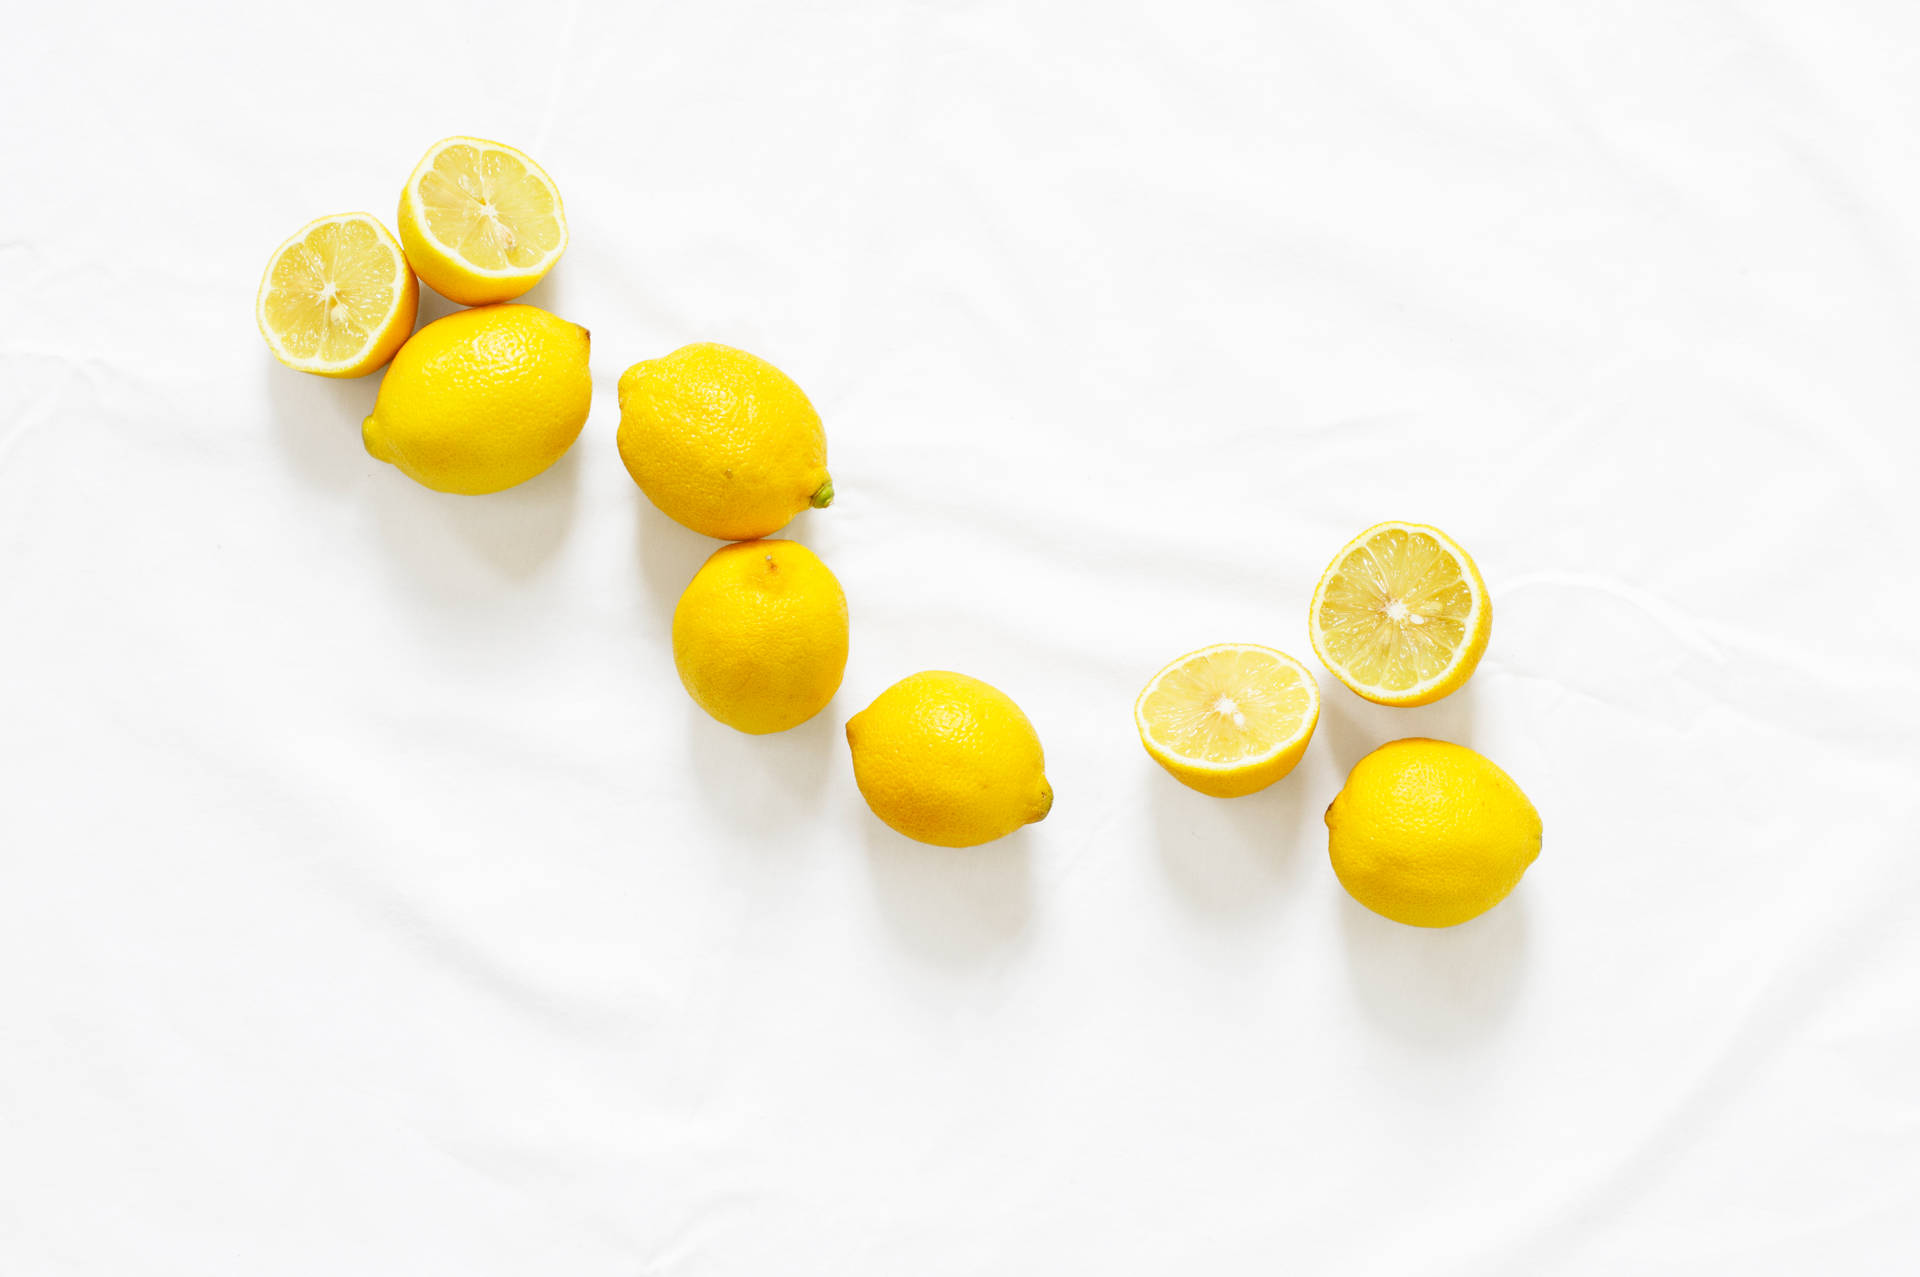 Yellow zesty American lemons on white surface wallpaper.